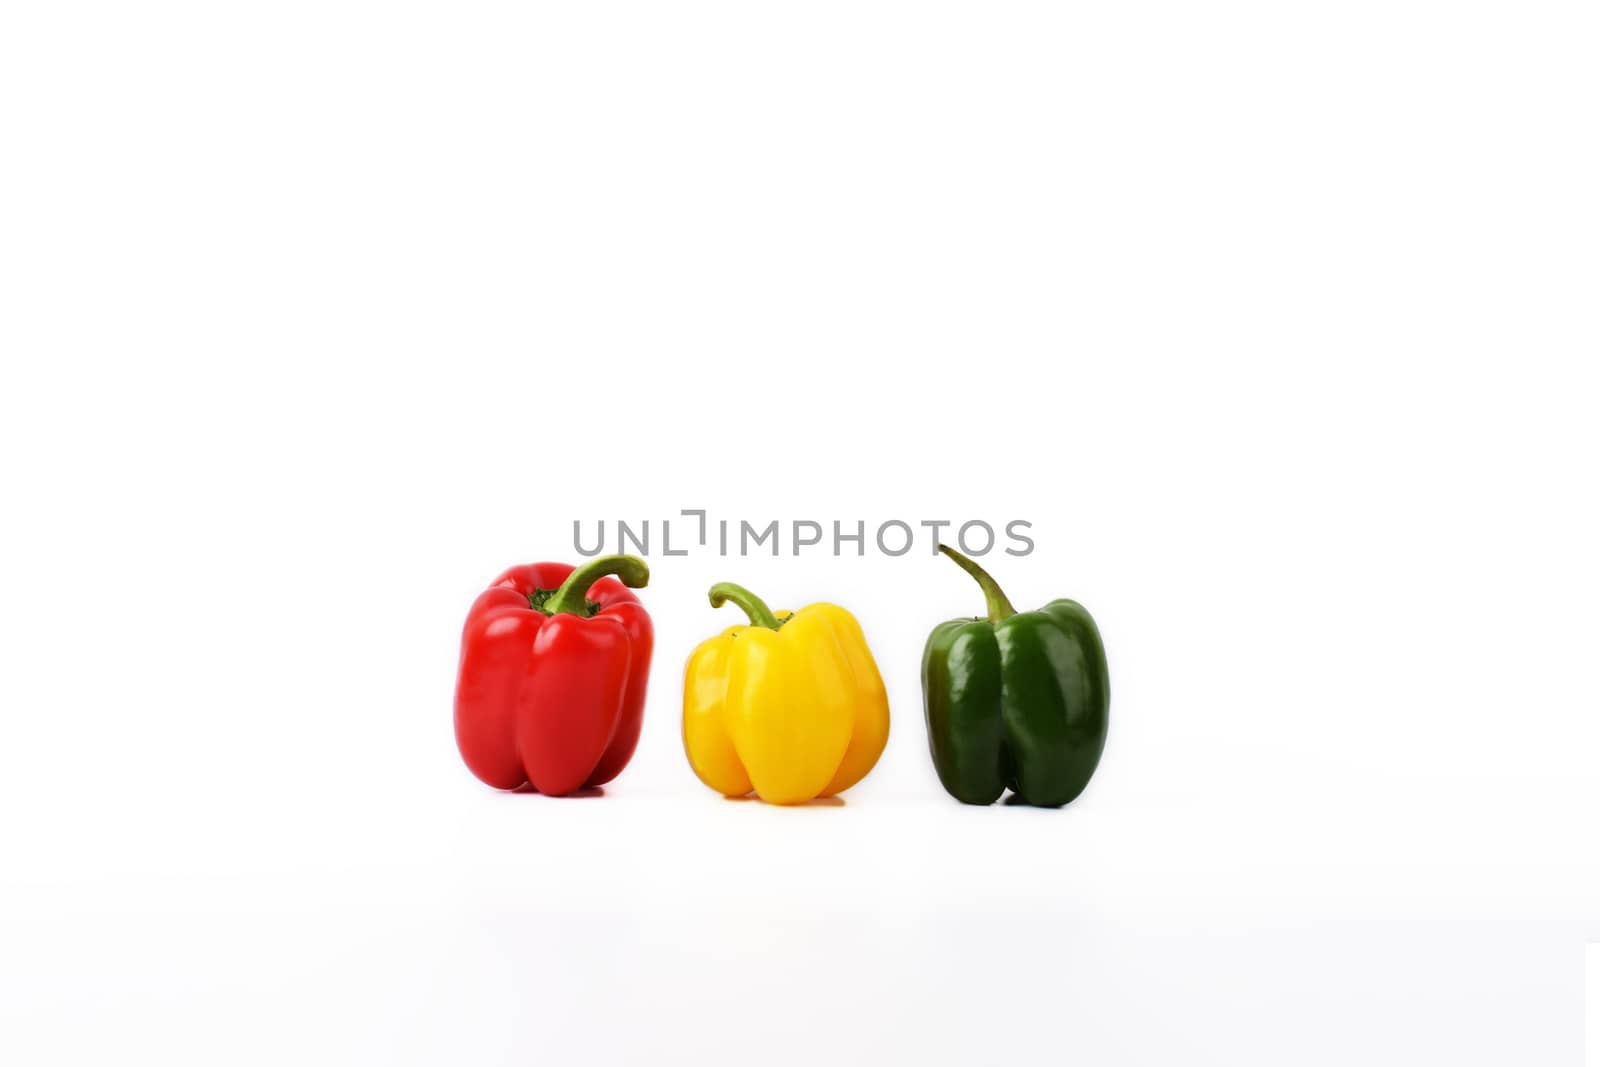 A new minimalist objectivity #85 - Three Peppers by Kazimirko